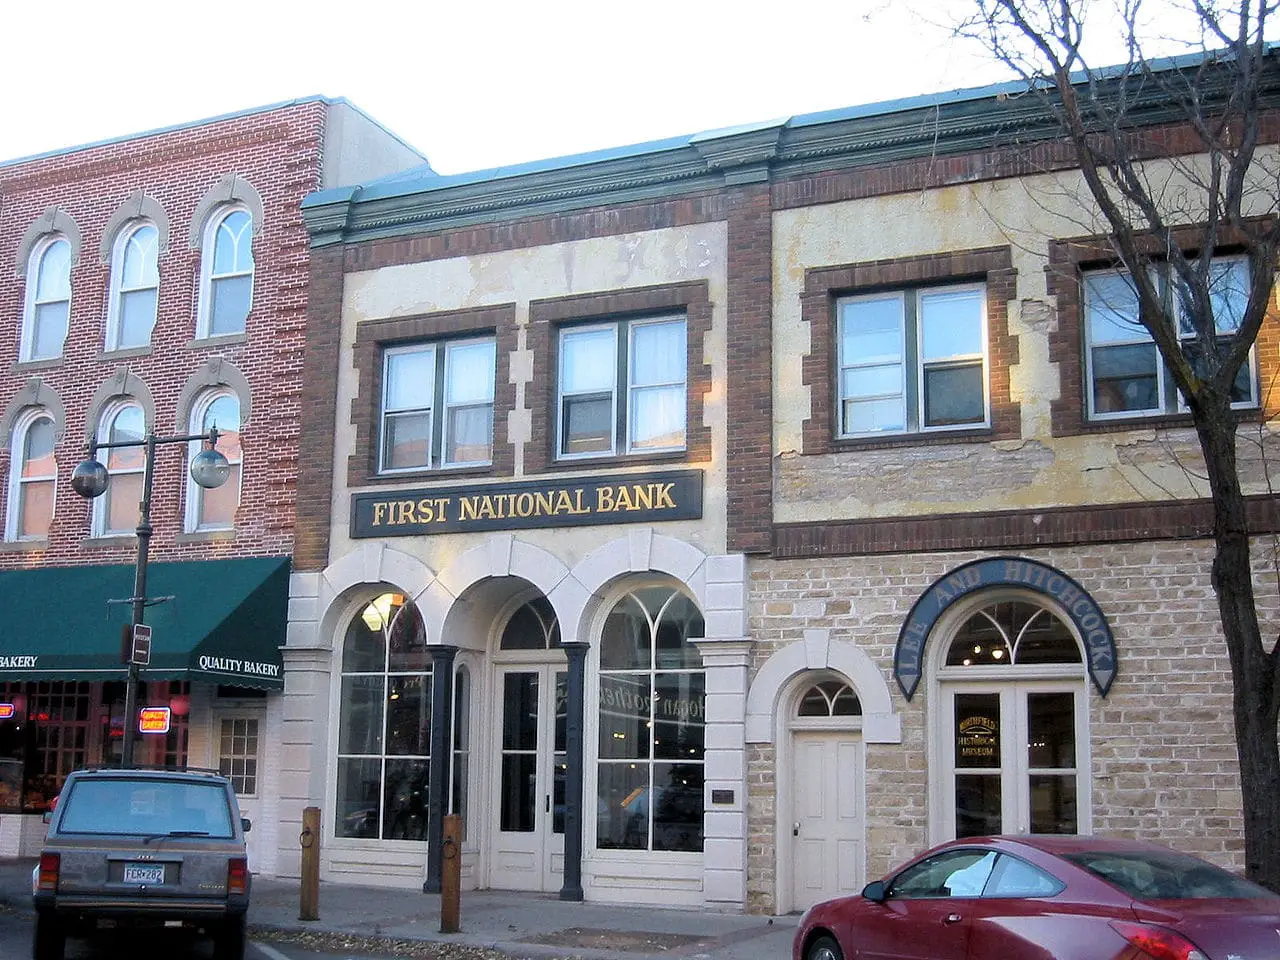 First National Bank of Northfield, Minnesota.